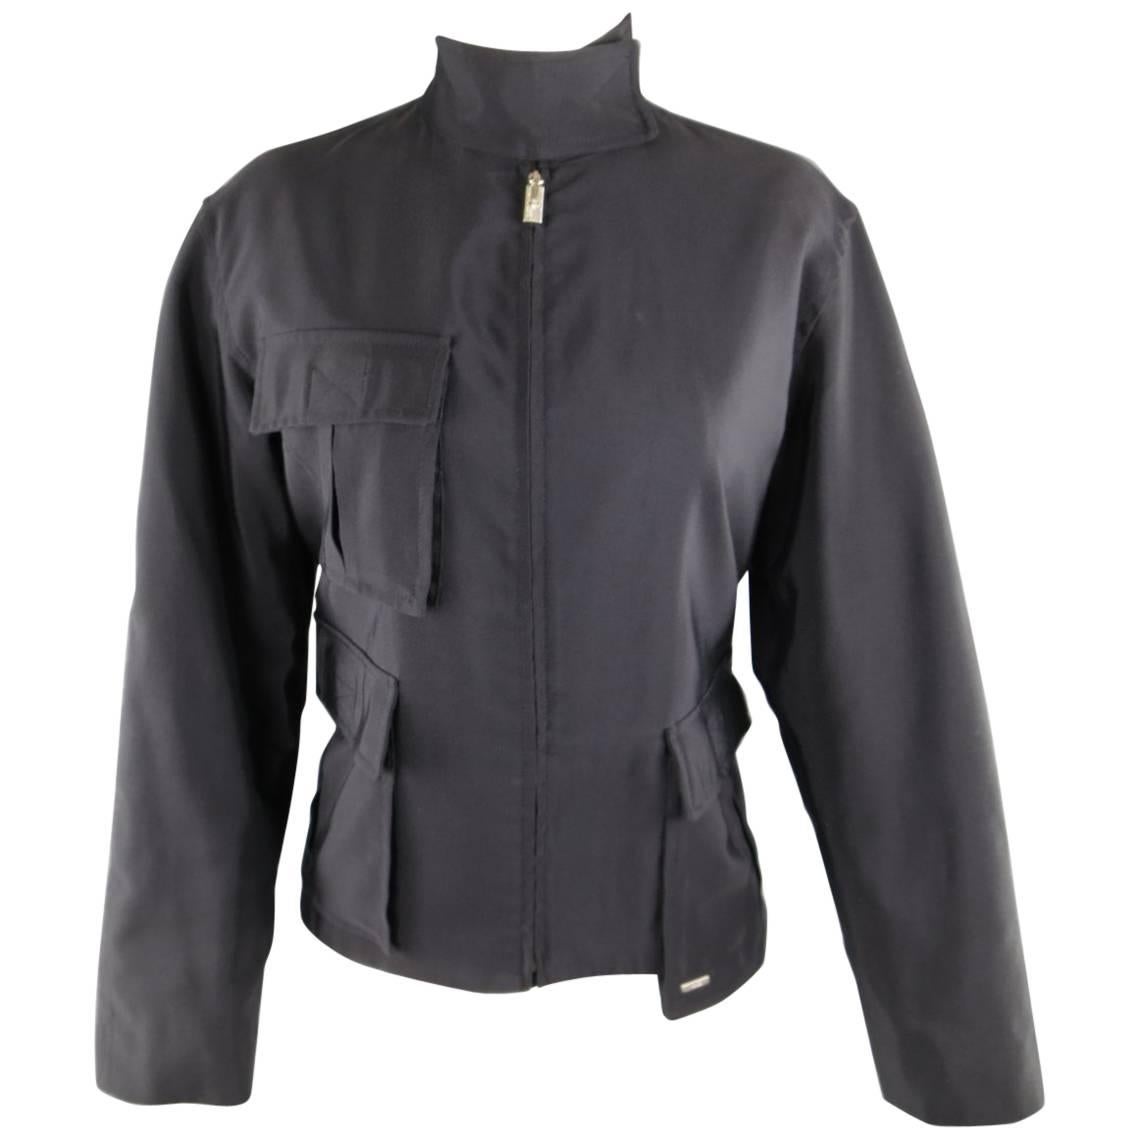 1990s GIANNI VERSACE Size 8 Black Cotton / Rayon High Collar Military Jacket